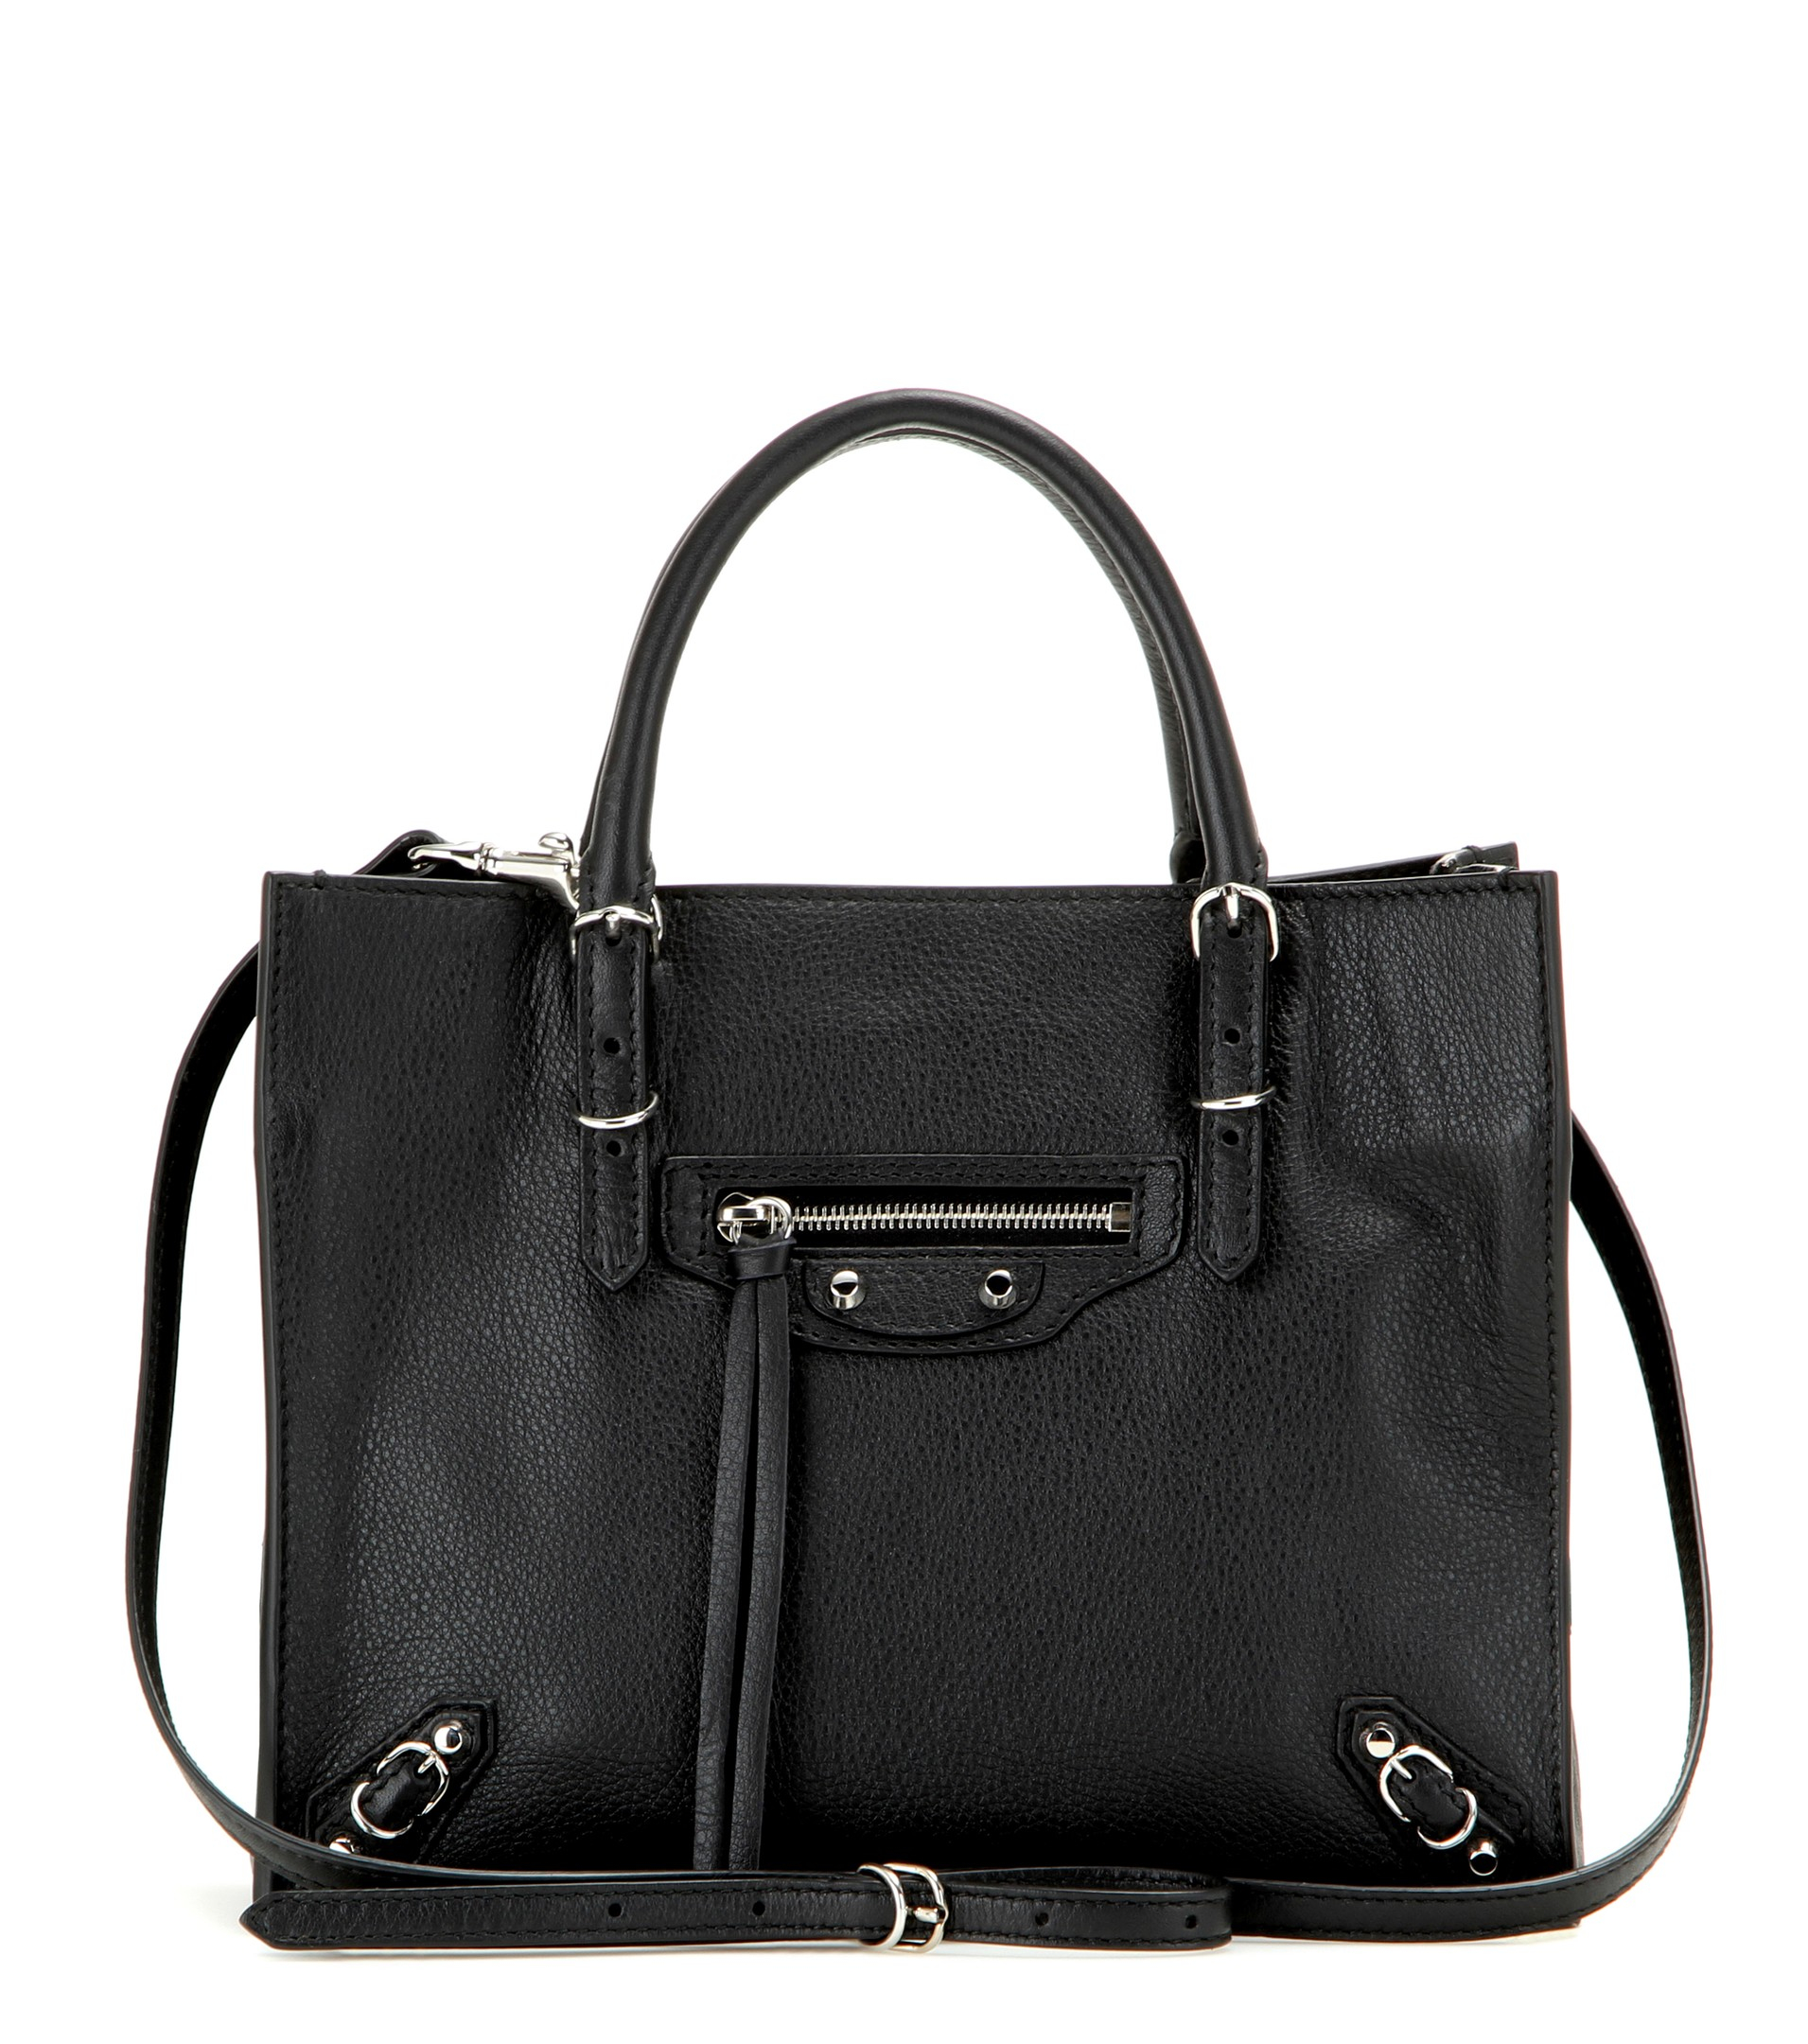 Balenciaga Mini Papier A4 Zip Around Leather Shoulder Bag in Black - Lyst